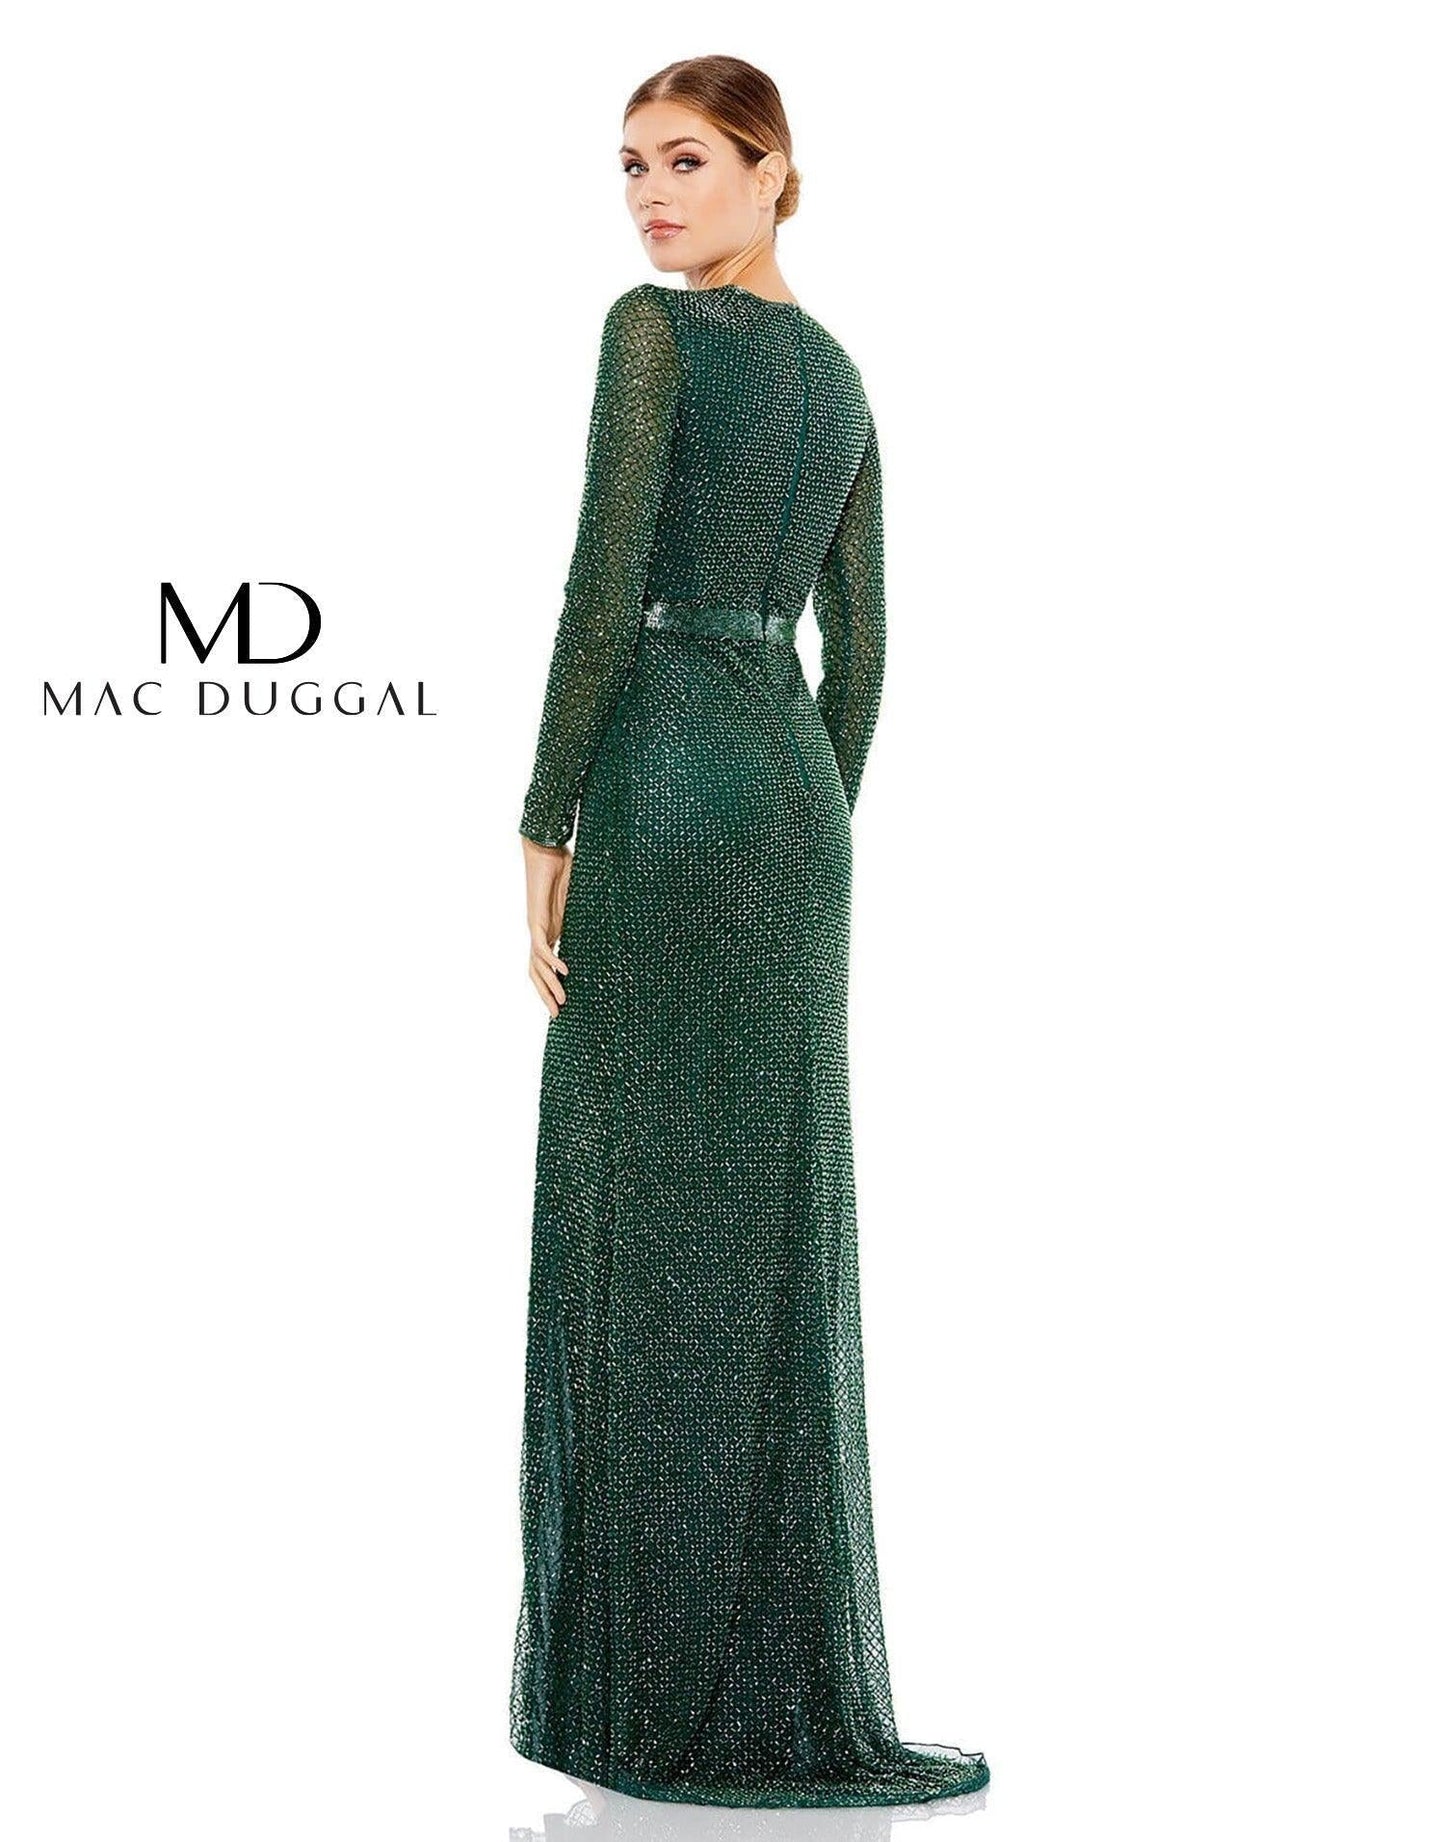 Mac Duggal Formal Beaded Long Sleeve Dress 5056 - The Dress Outlet